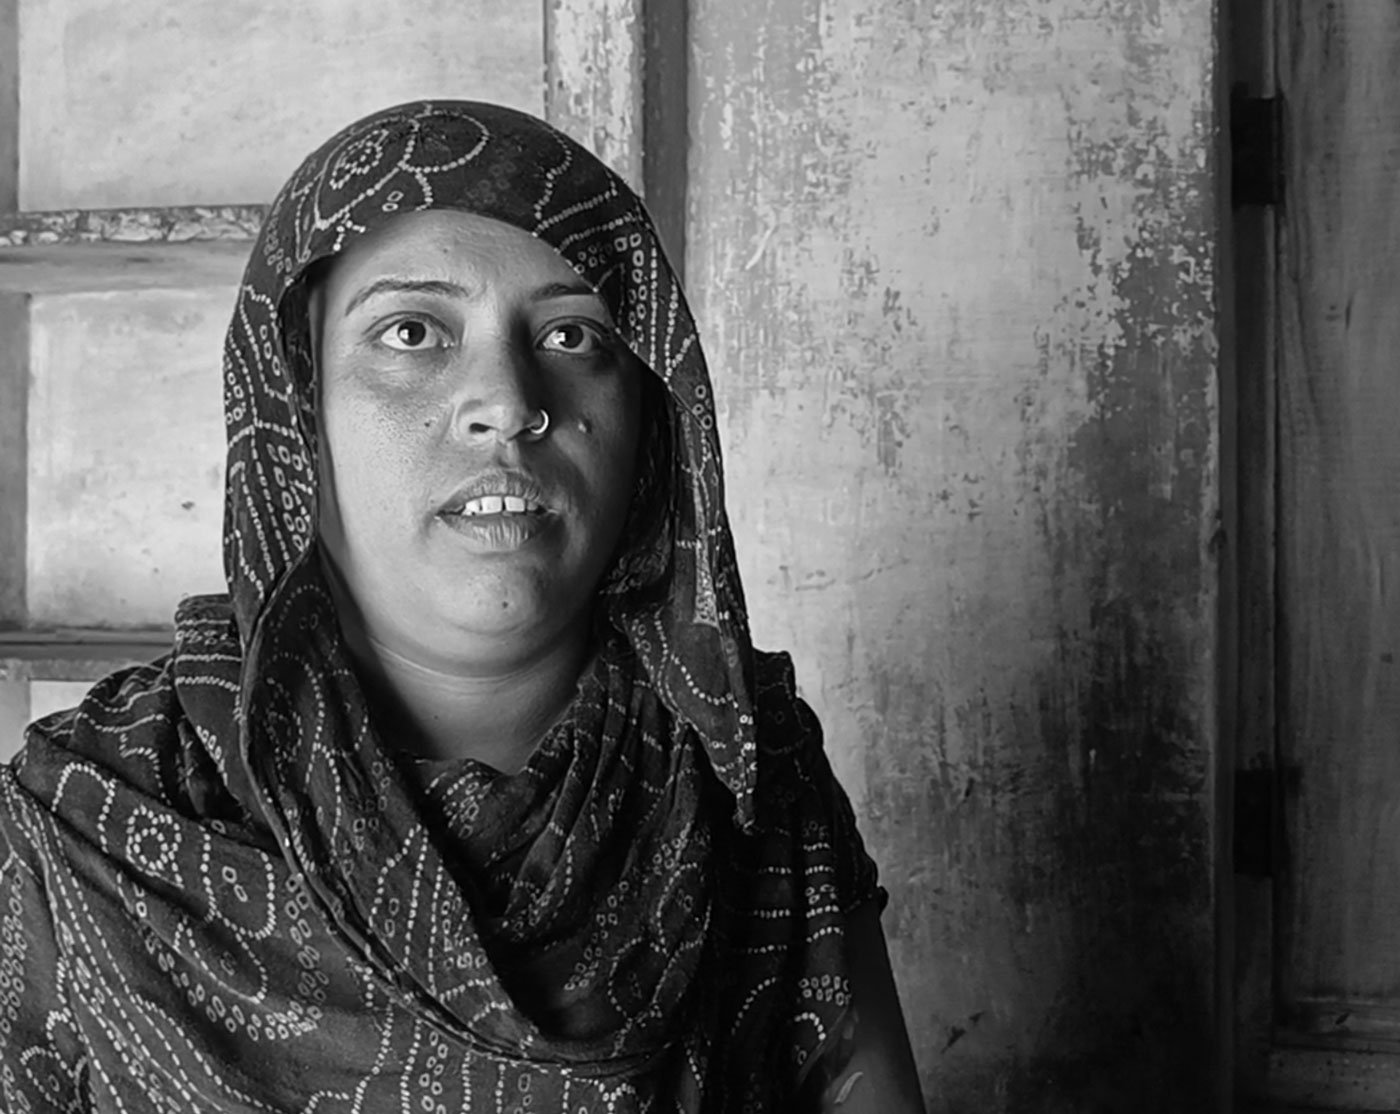 Varsha Dangi was trafficked from her village in Sagar district of Madhya Pradesh and brought to Jhunjhunun